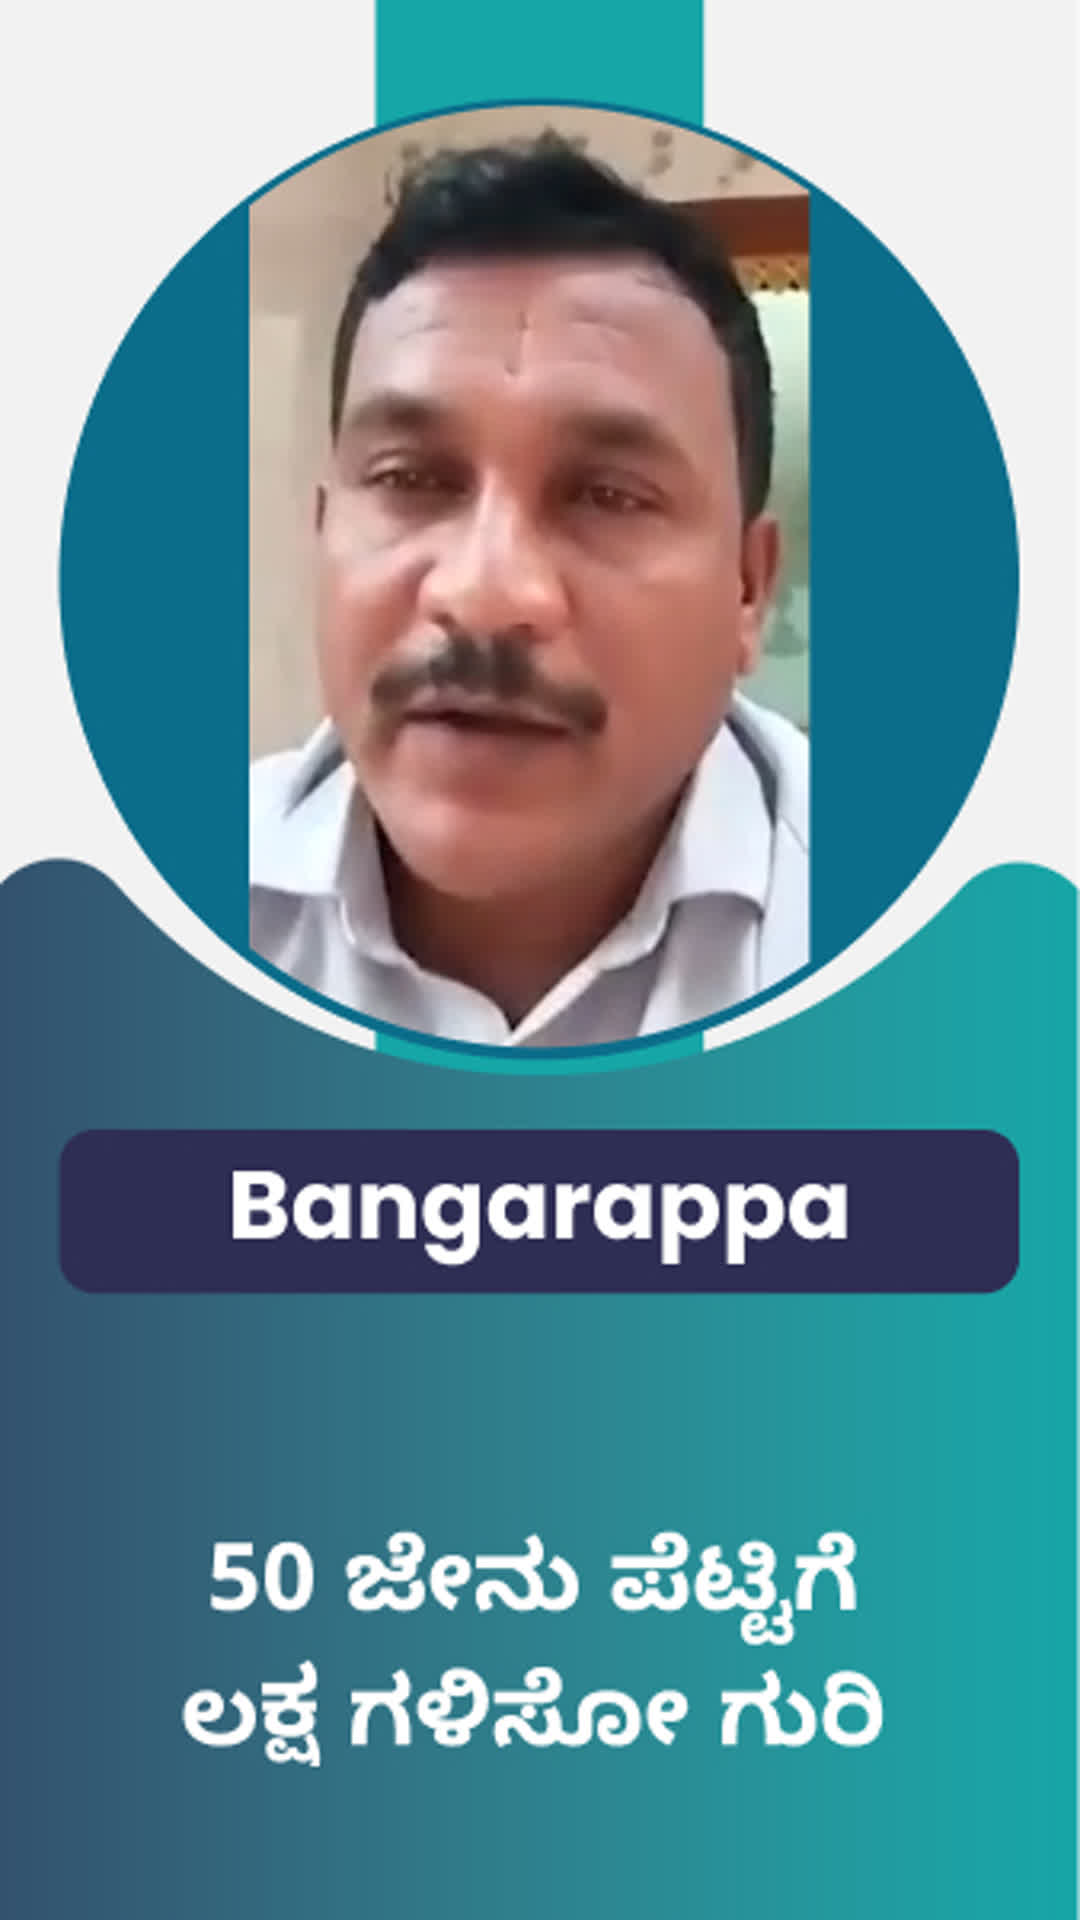 Bangarappa's Honest Review of ffreedom app - Udupi ,Karnataka